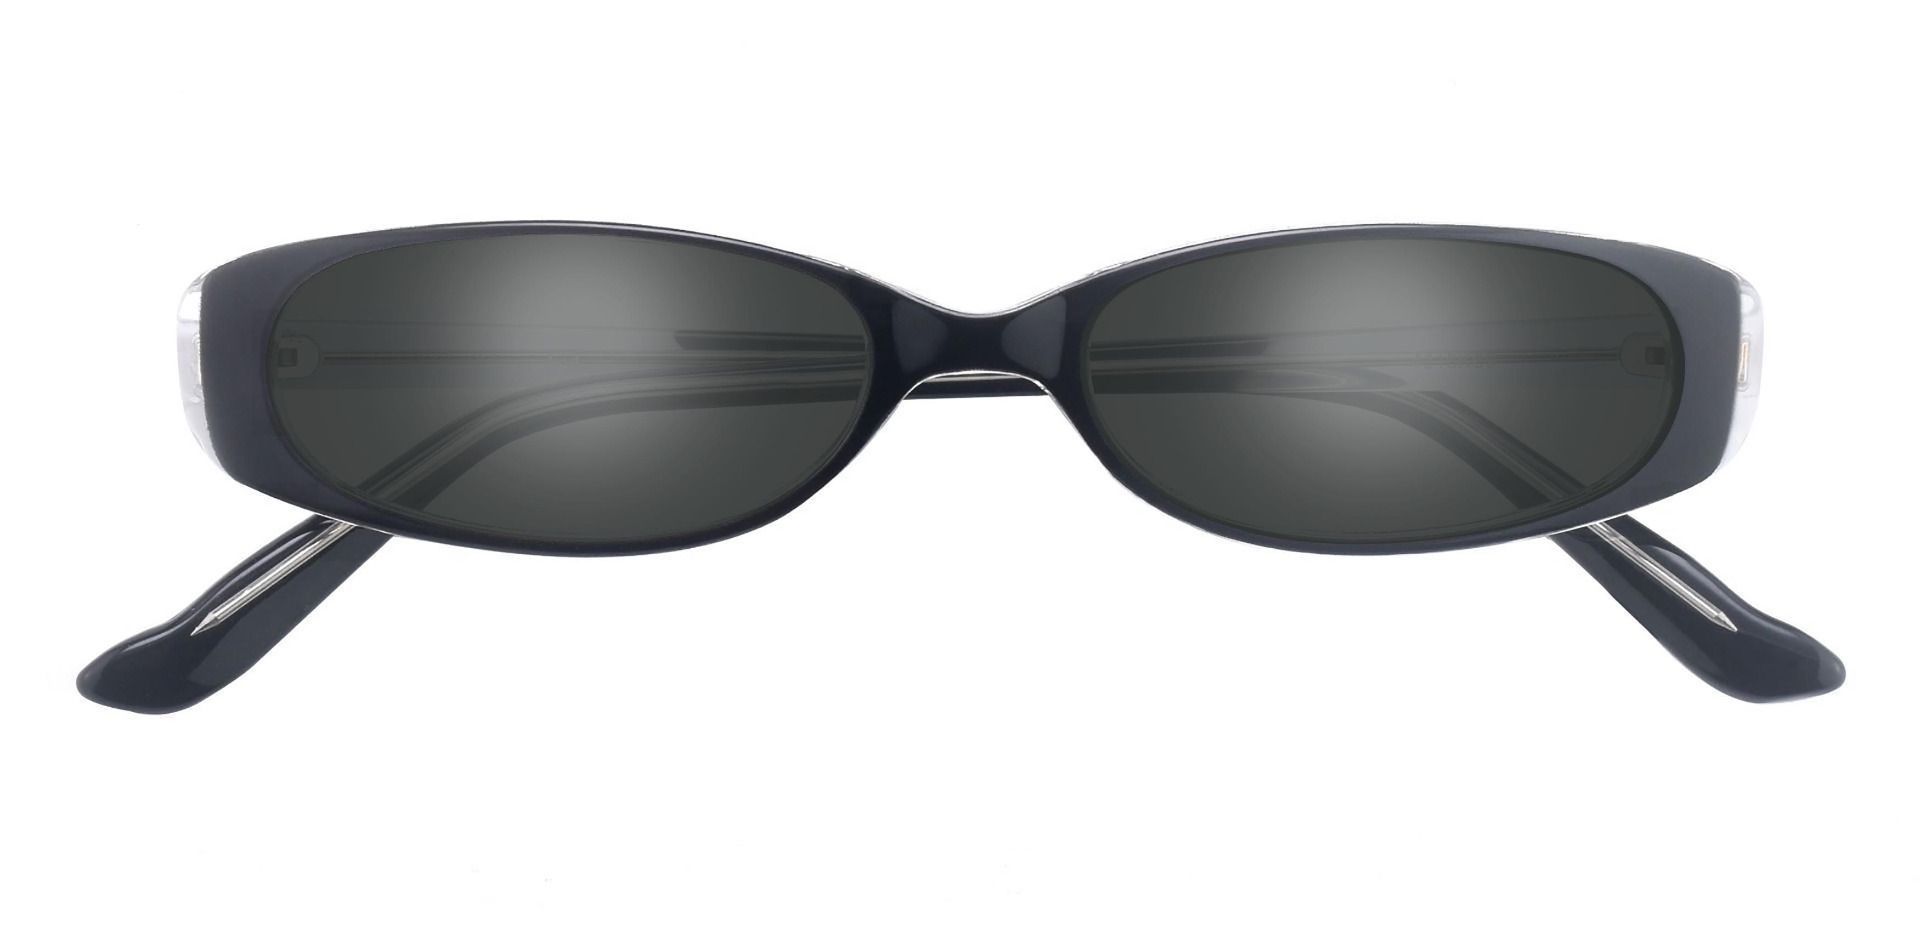 Venetia Oval Single Vision Sunglasses - Black Frame With Gray Lenses